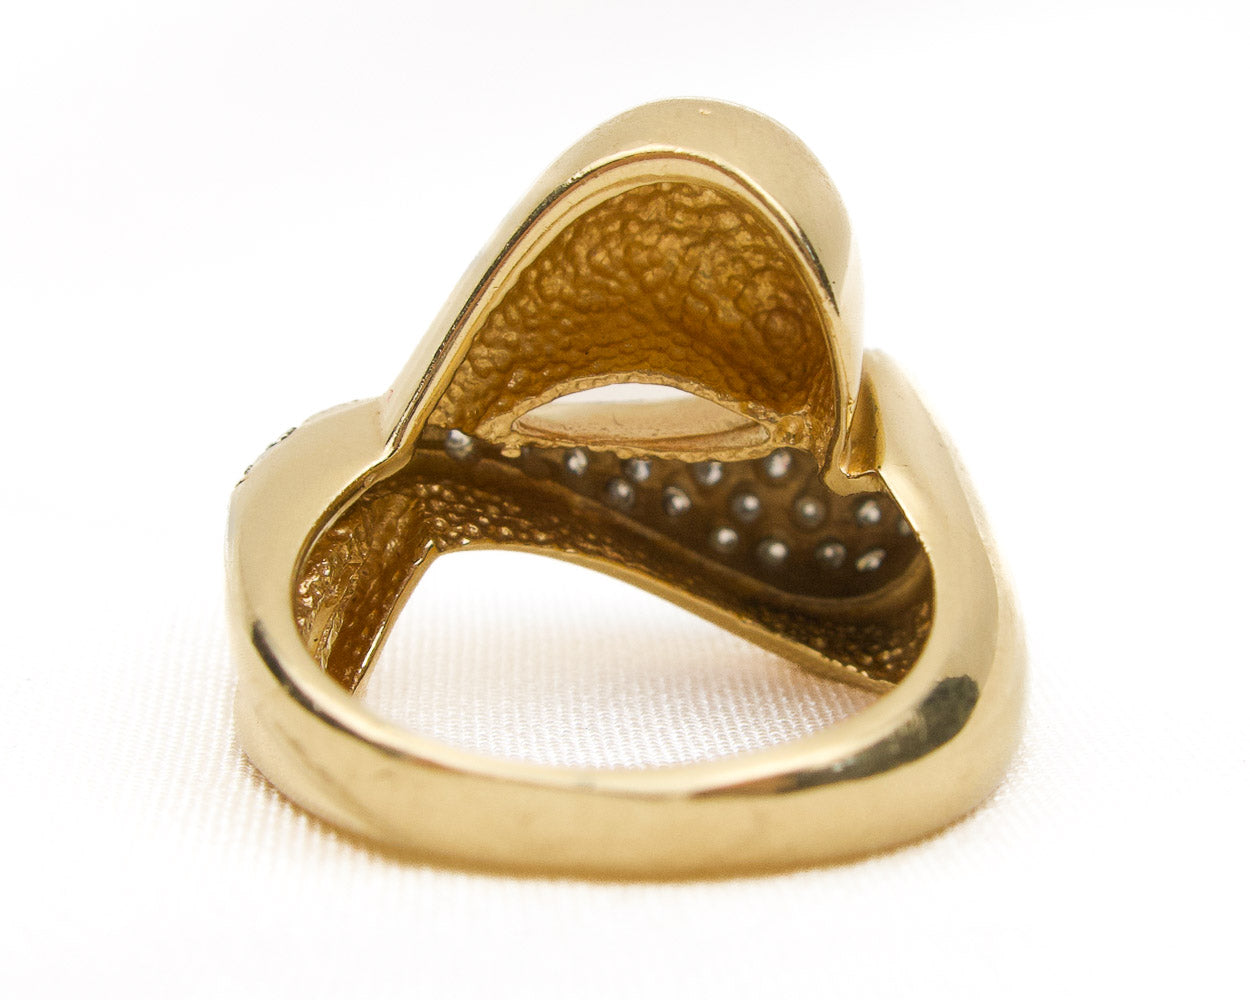 Late-Midcentury Modernist Diamond Ring